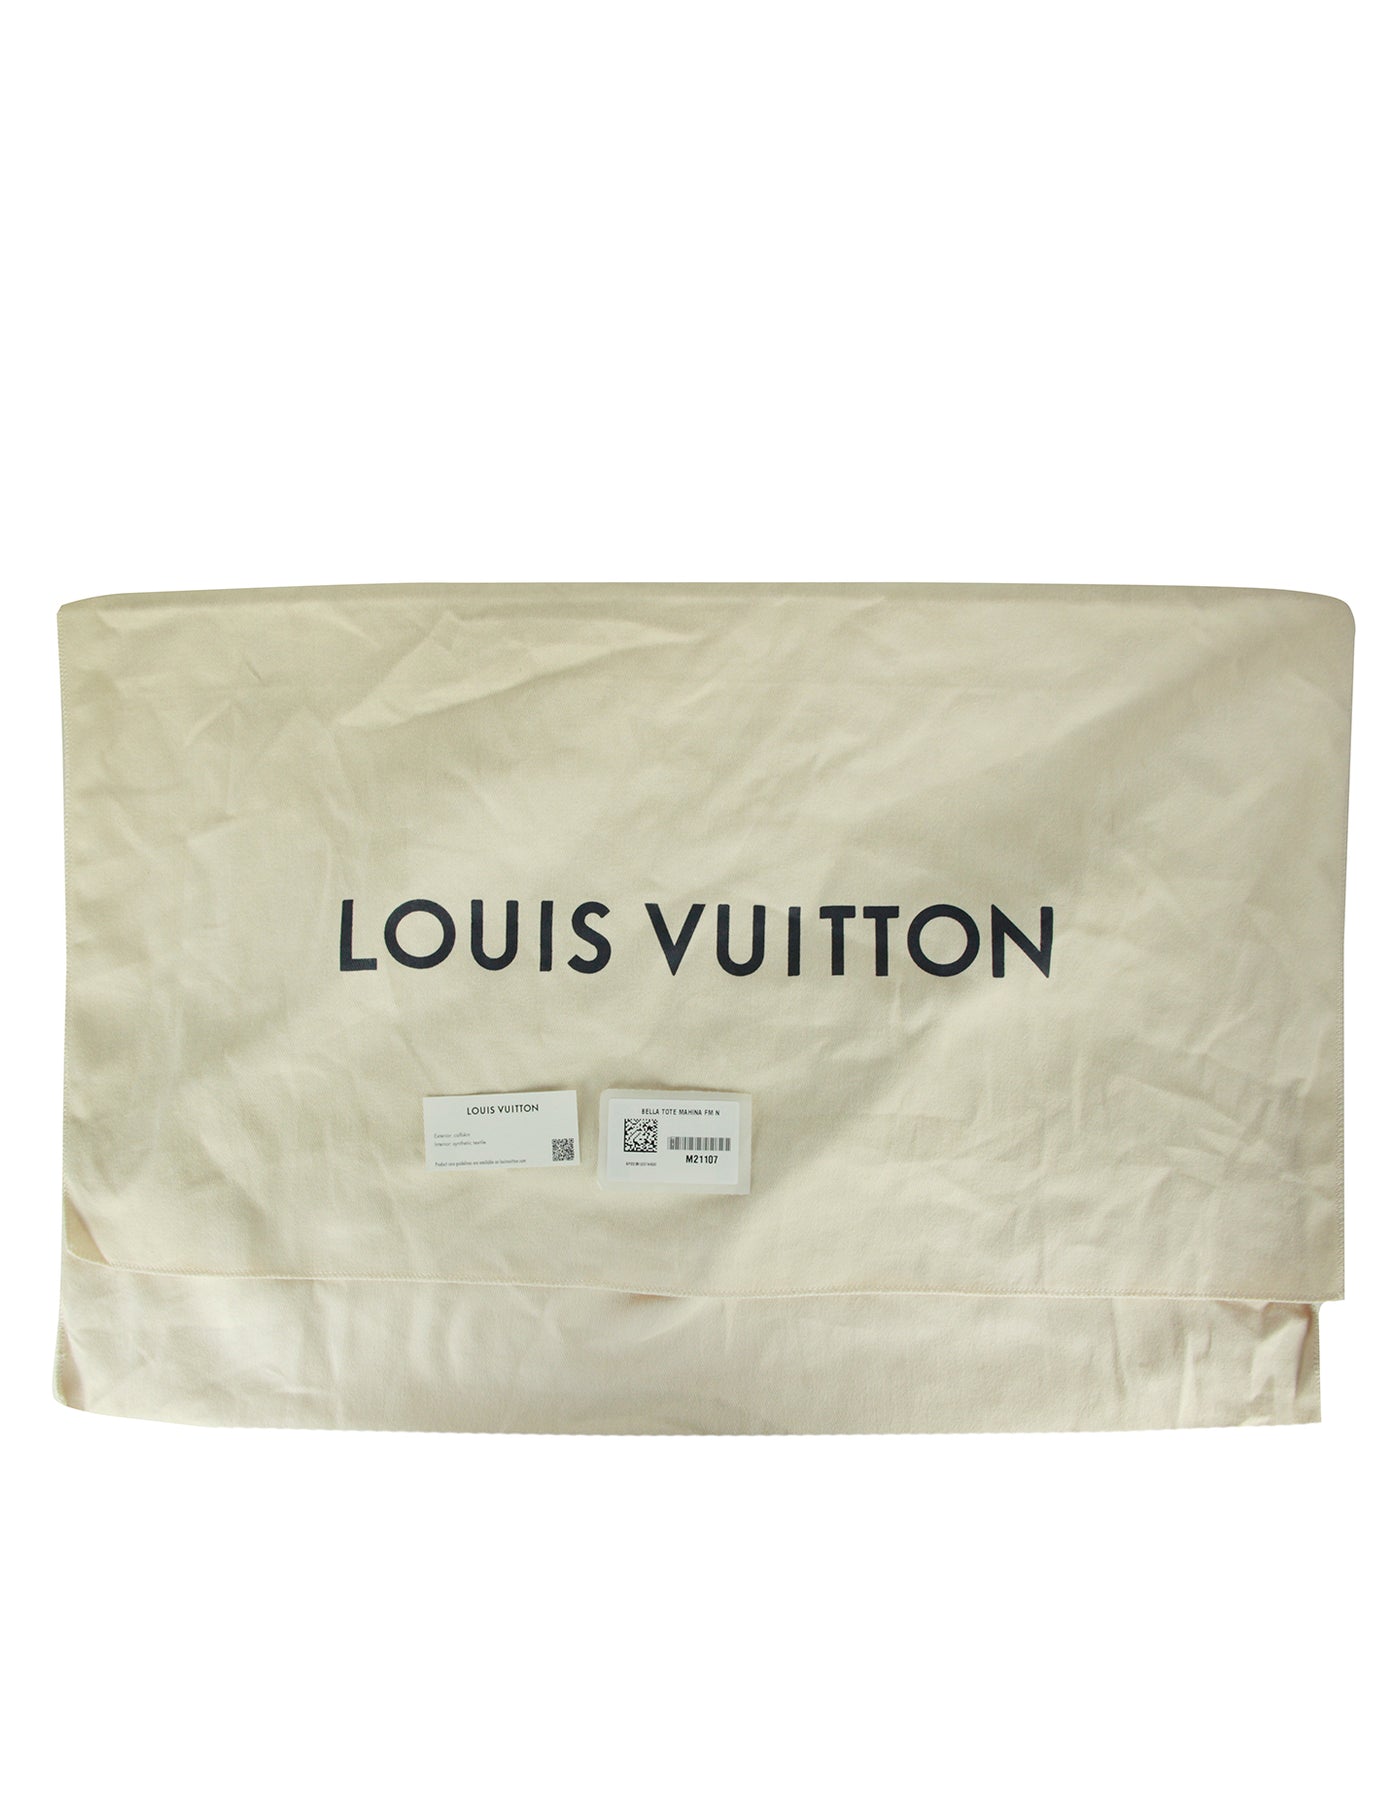 LOUIS VUITTON M59655 Bella Tote Bag Mahina leather Beige Camel Ex++ 0221T